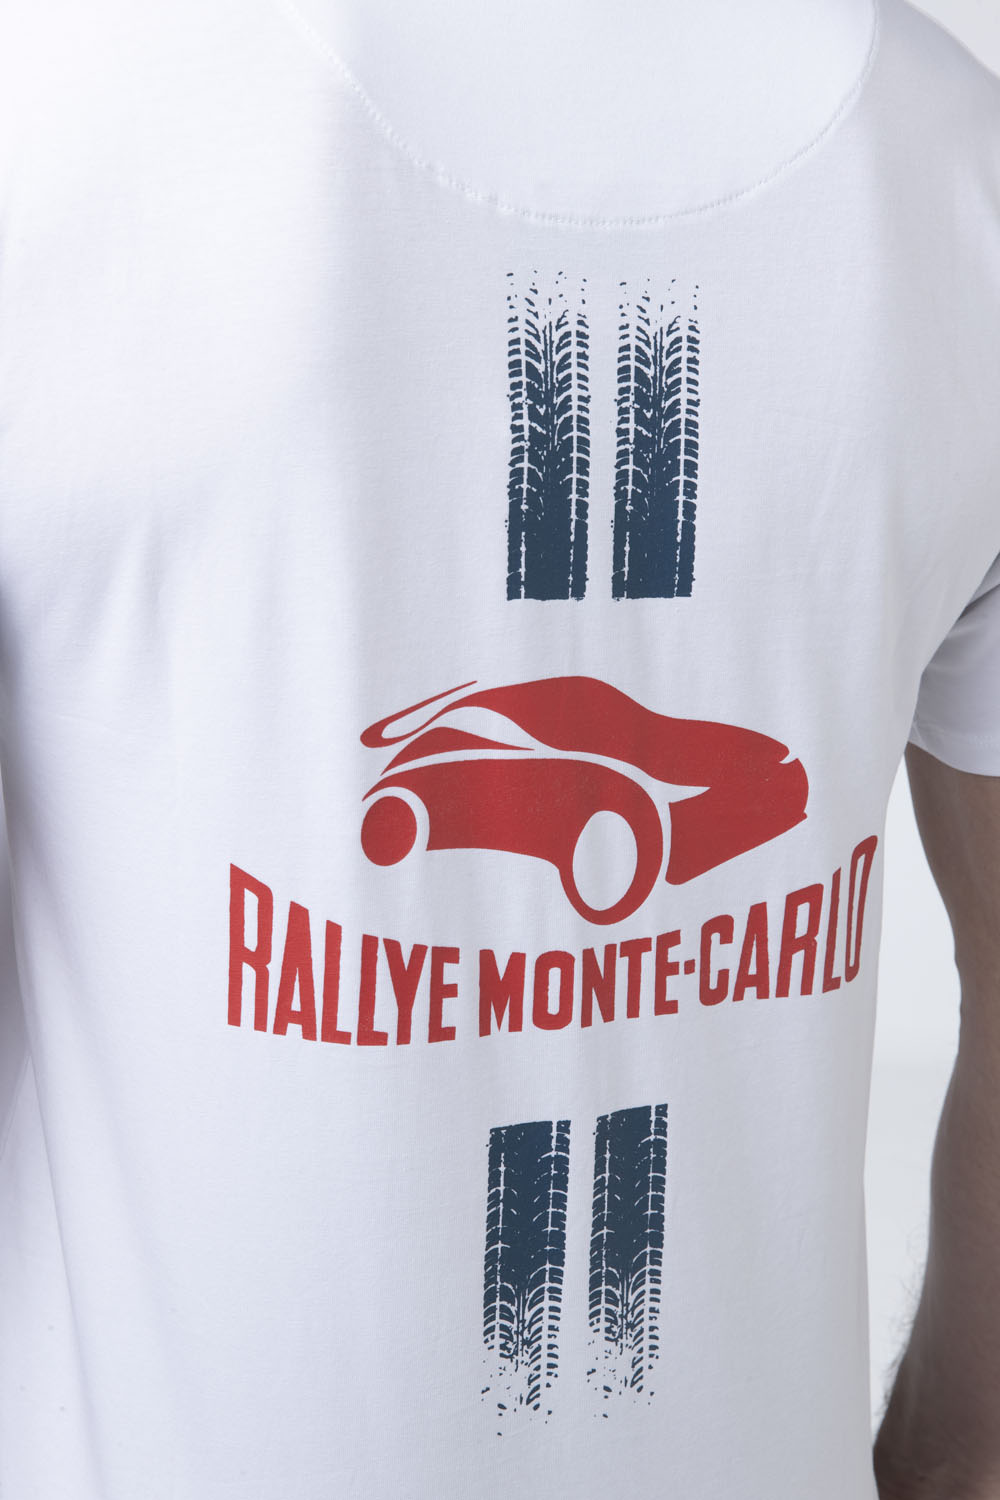 Tee Shirt Vintage Rallye Monte-Carlo, Monaco Automobile Club 36